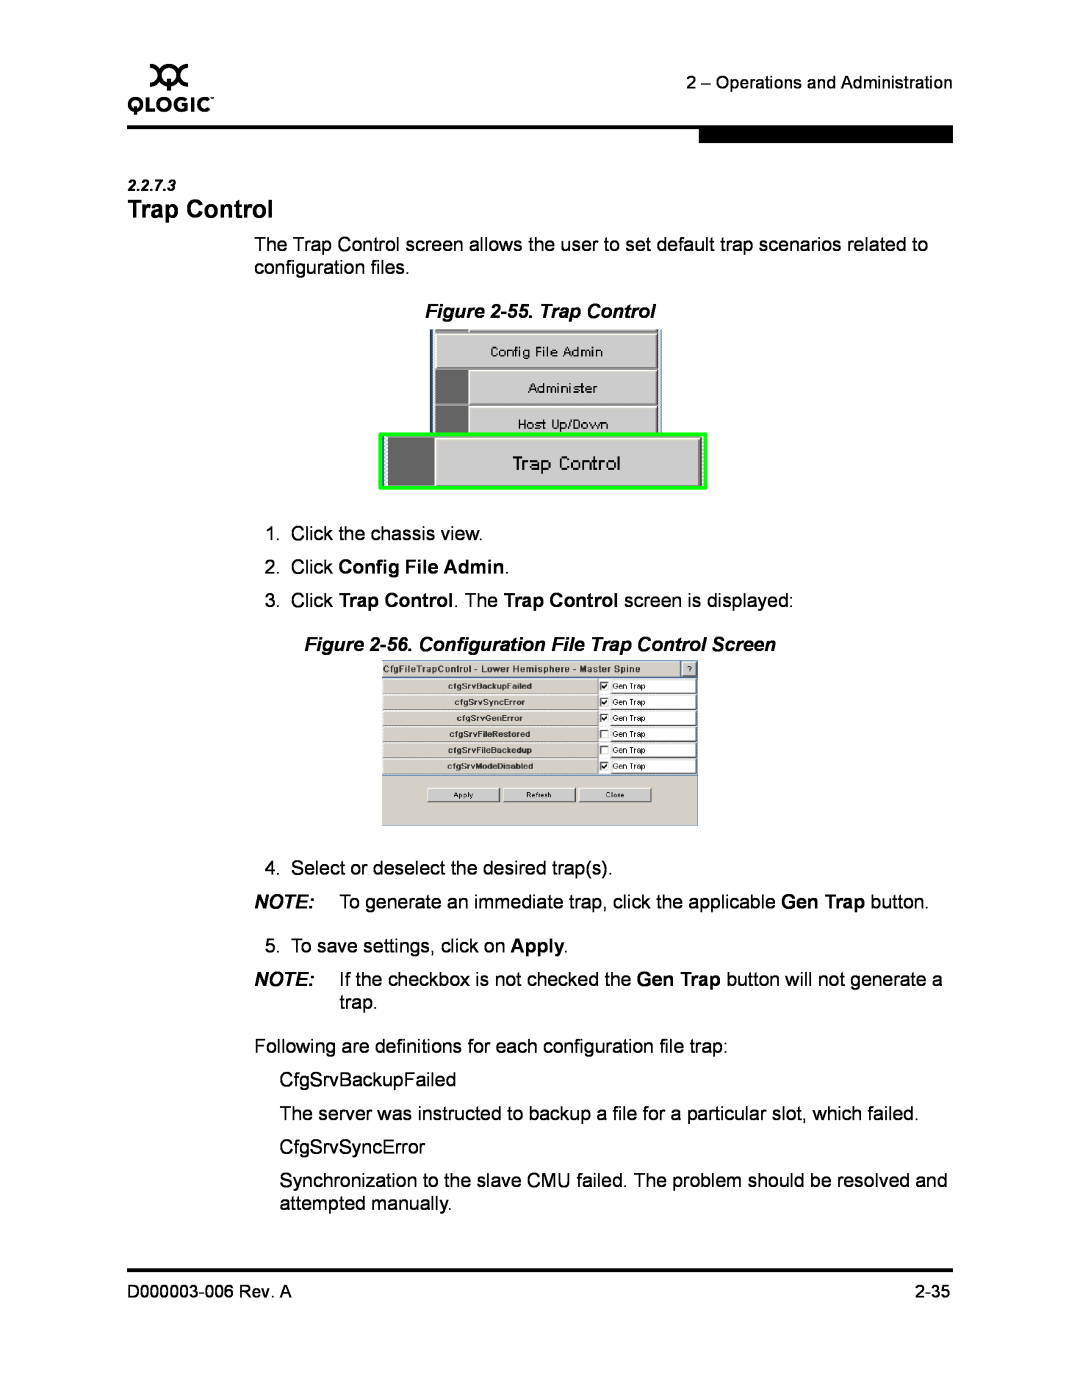 Q-Logic 9000 manual 55. Trap Control, 56. Configuration File Trap Control Screen, Click Config File Admin 